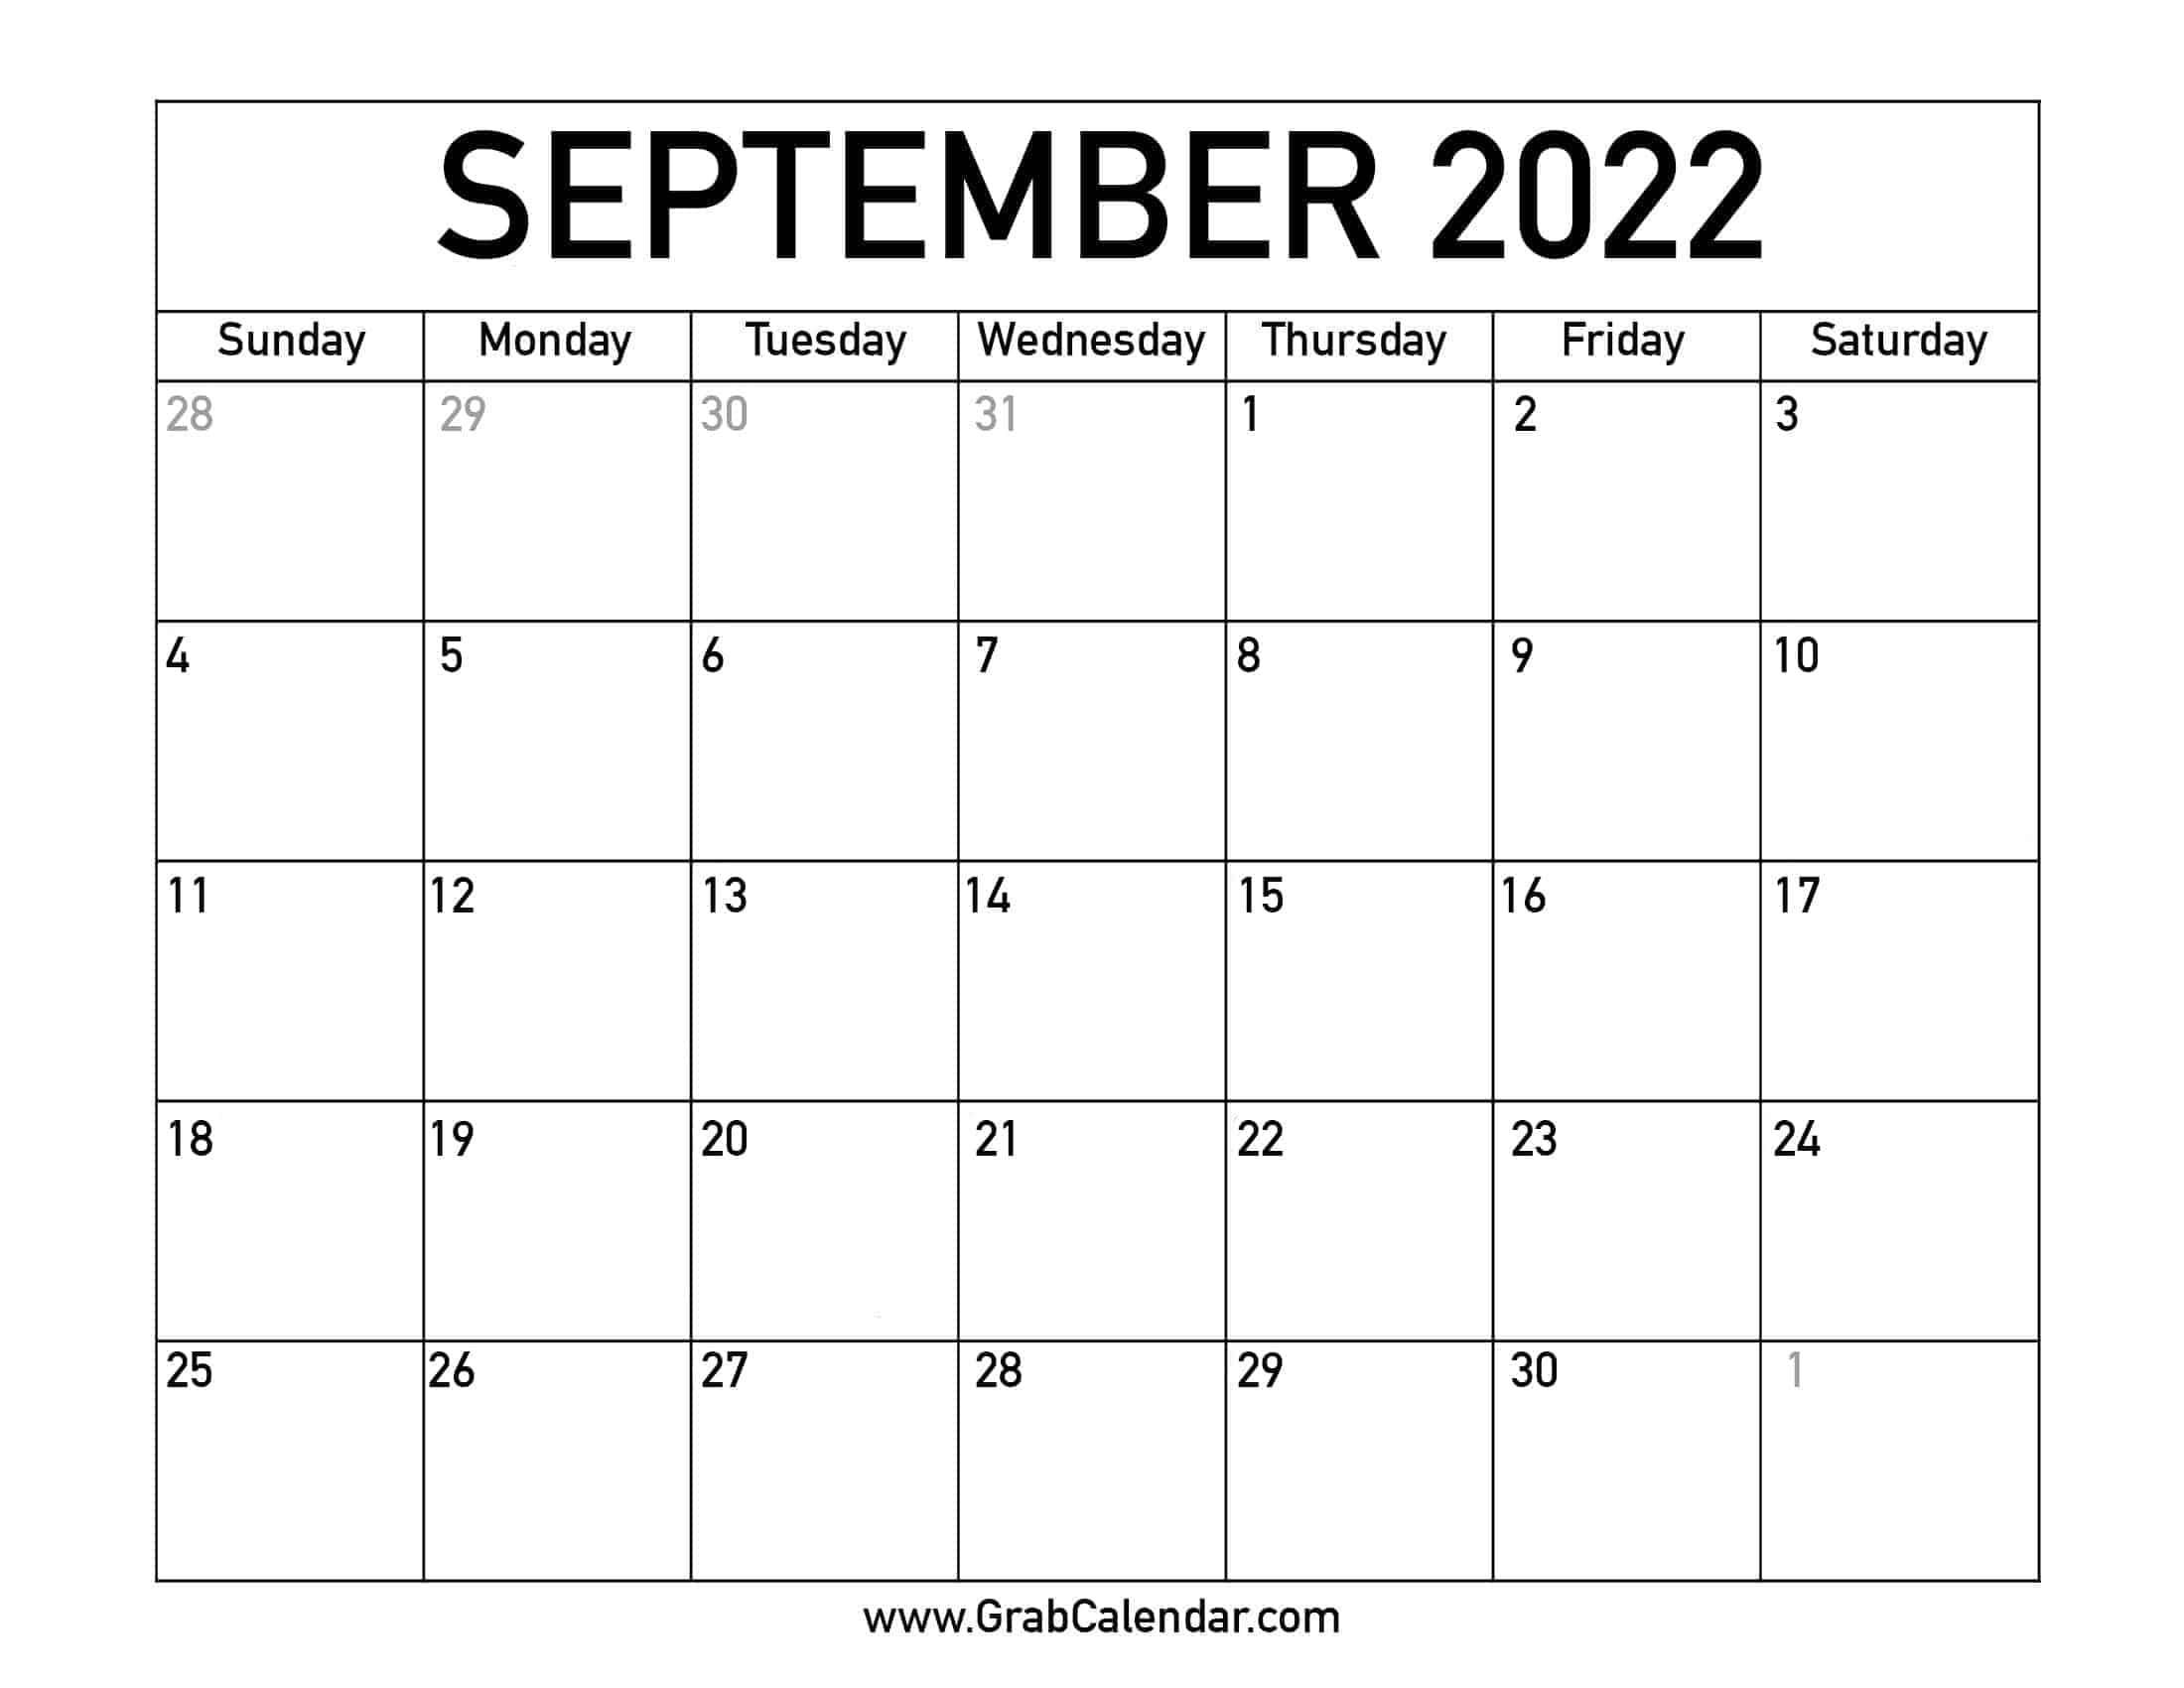 Sep 2022 Calendar Printable September 2022 Calendar